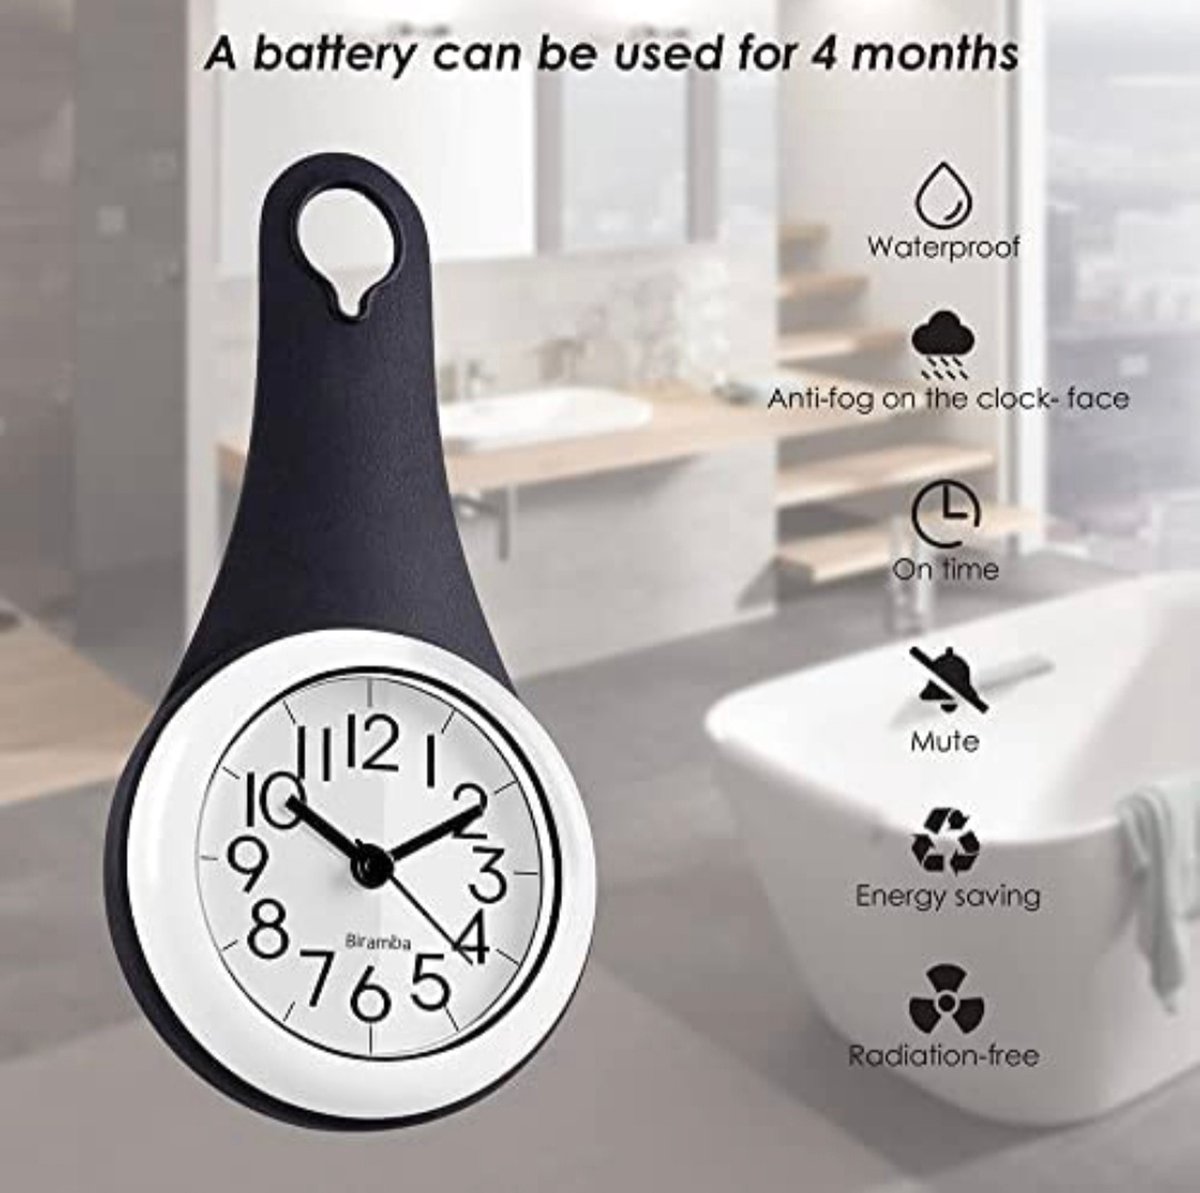 Horloge de salle de bain à Quartz - Klok de salle de bain étanche - Horloge  de Douche